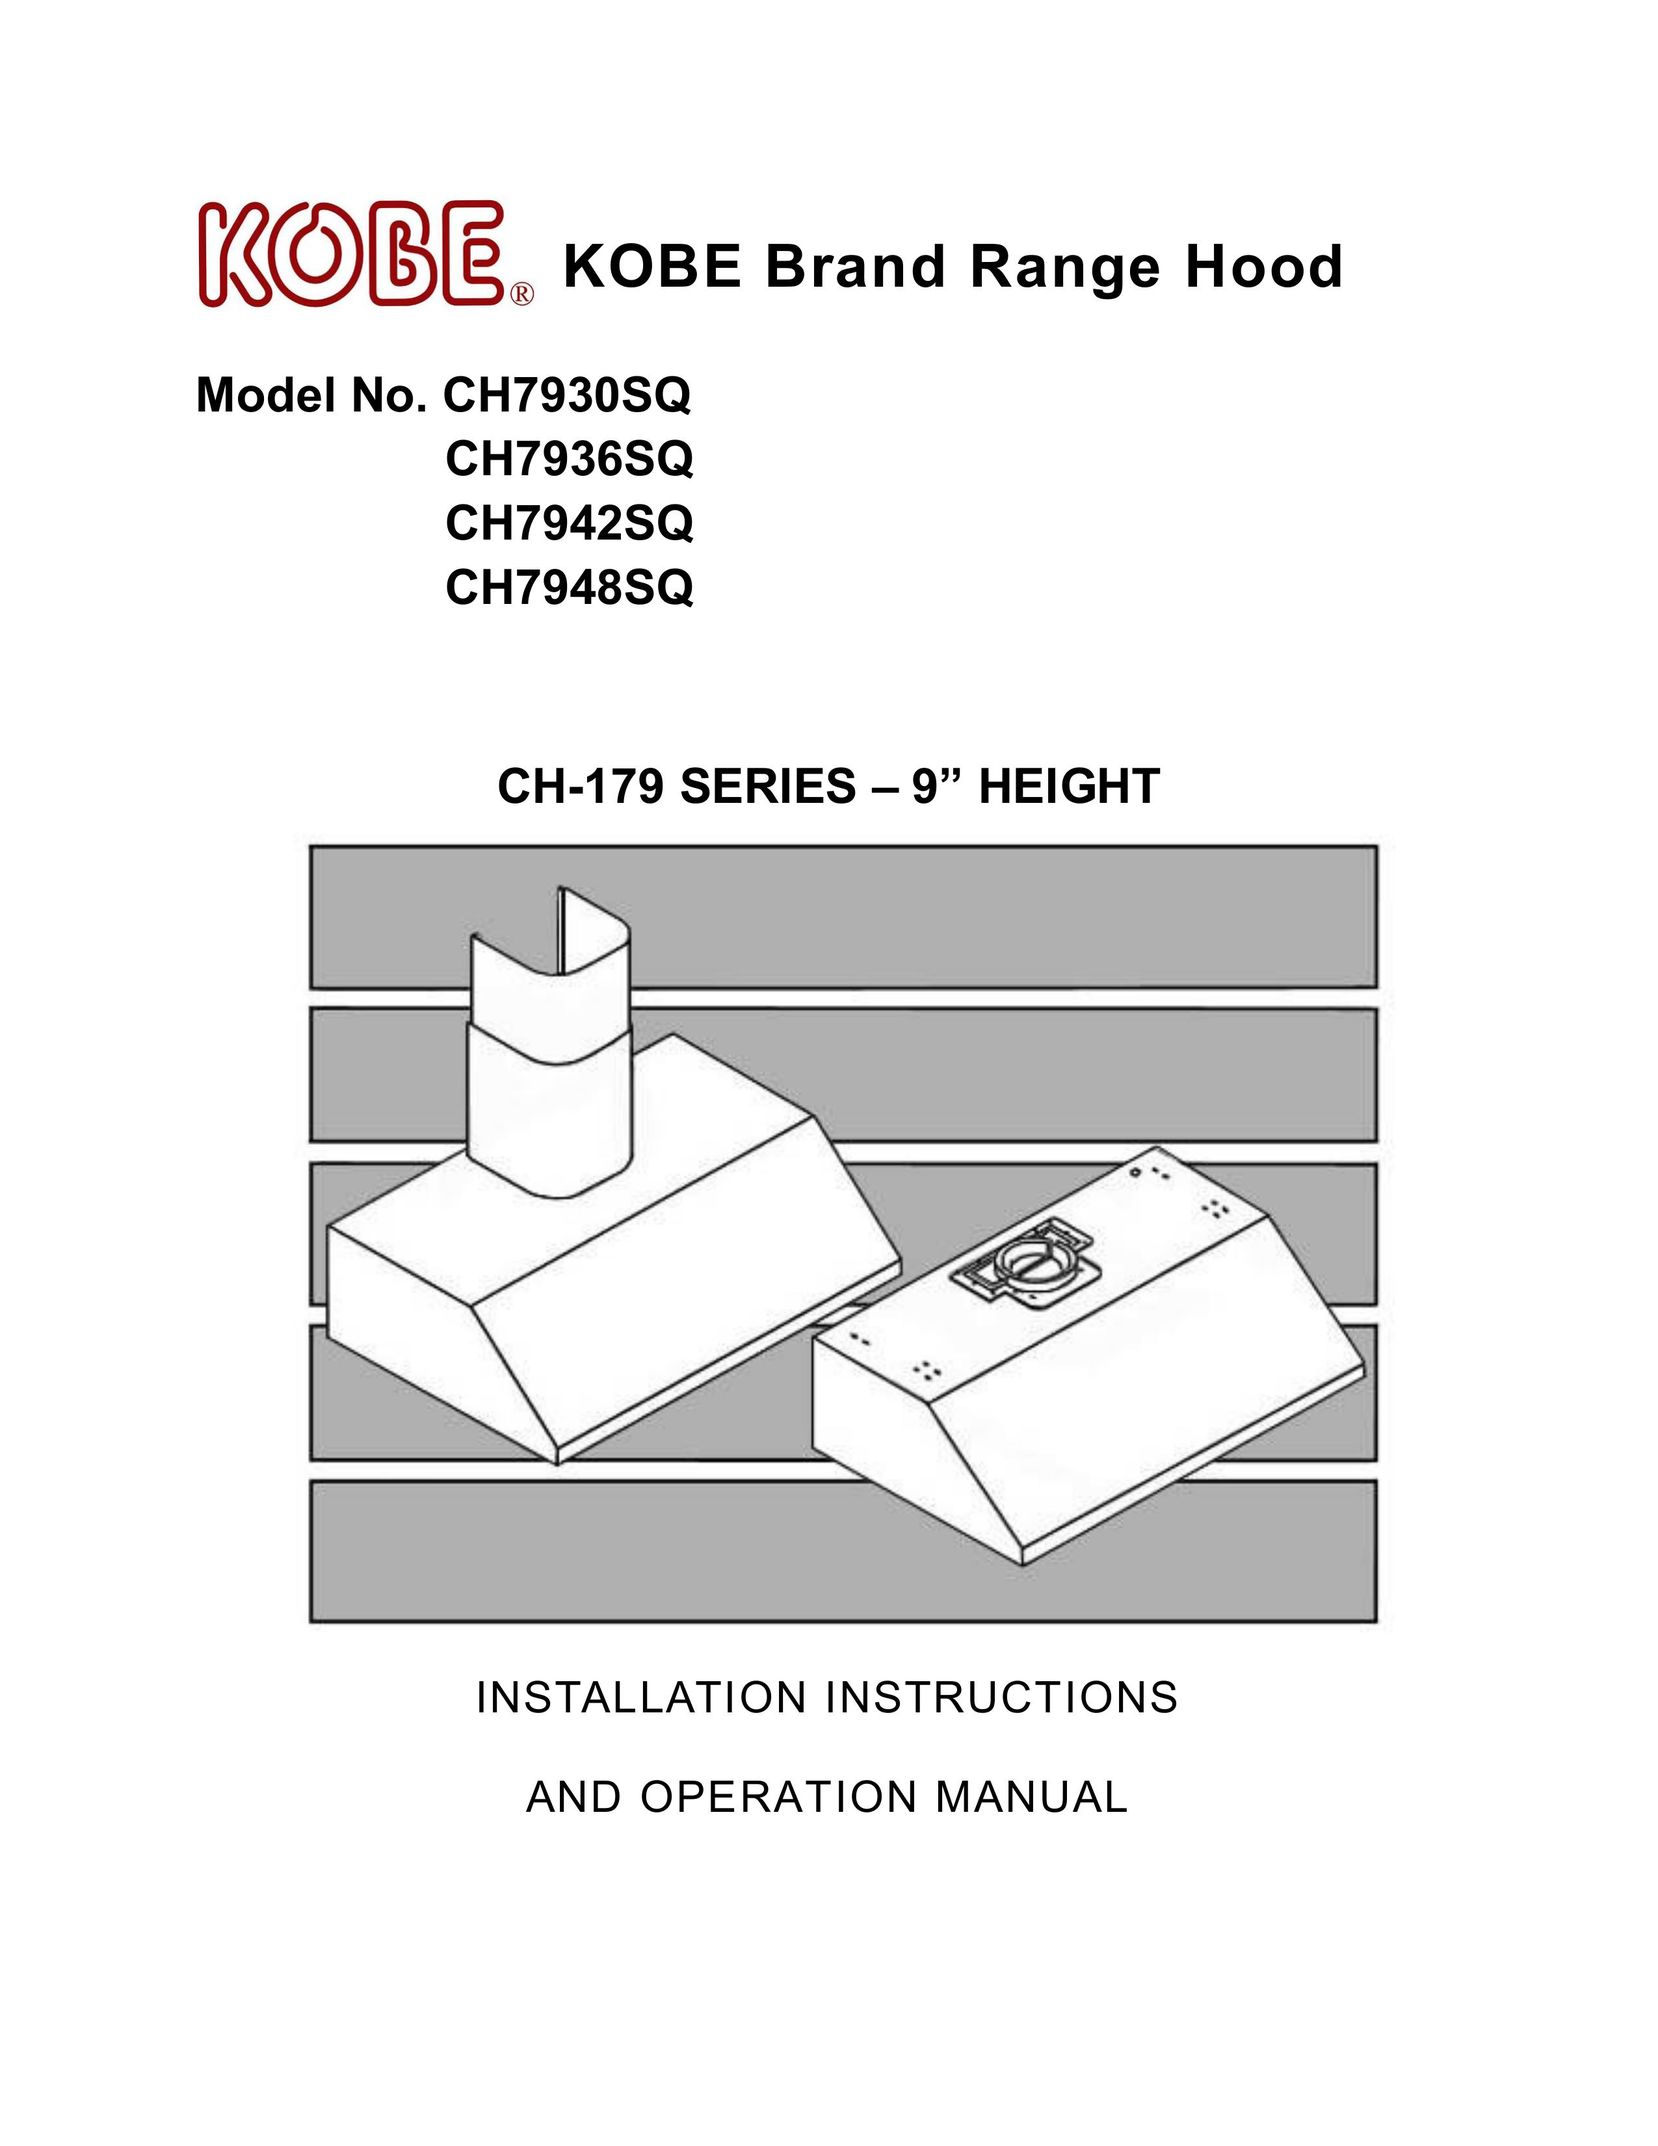 Kobe Range Hoods CH7930SQ Range User Manual